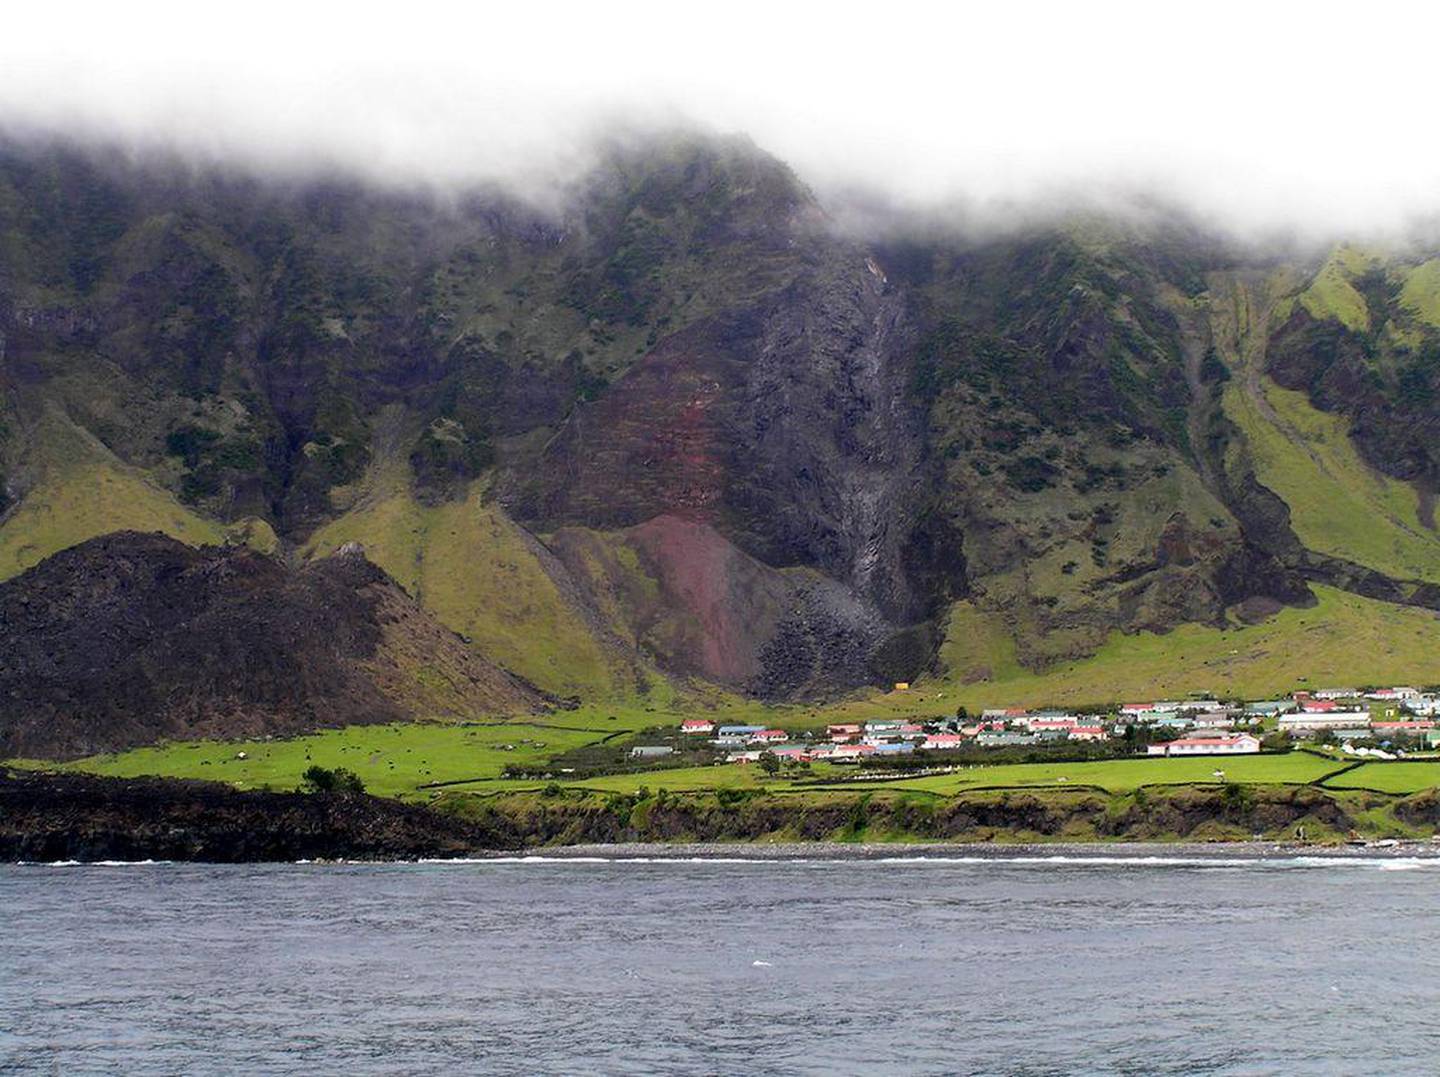 Edinburgh of the Seven Seas is the only village on Tristan da Cunha. Courtesy Flickr / Steve&Chris